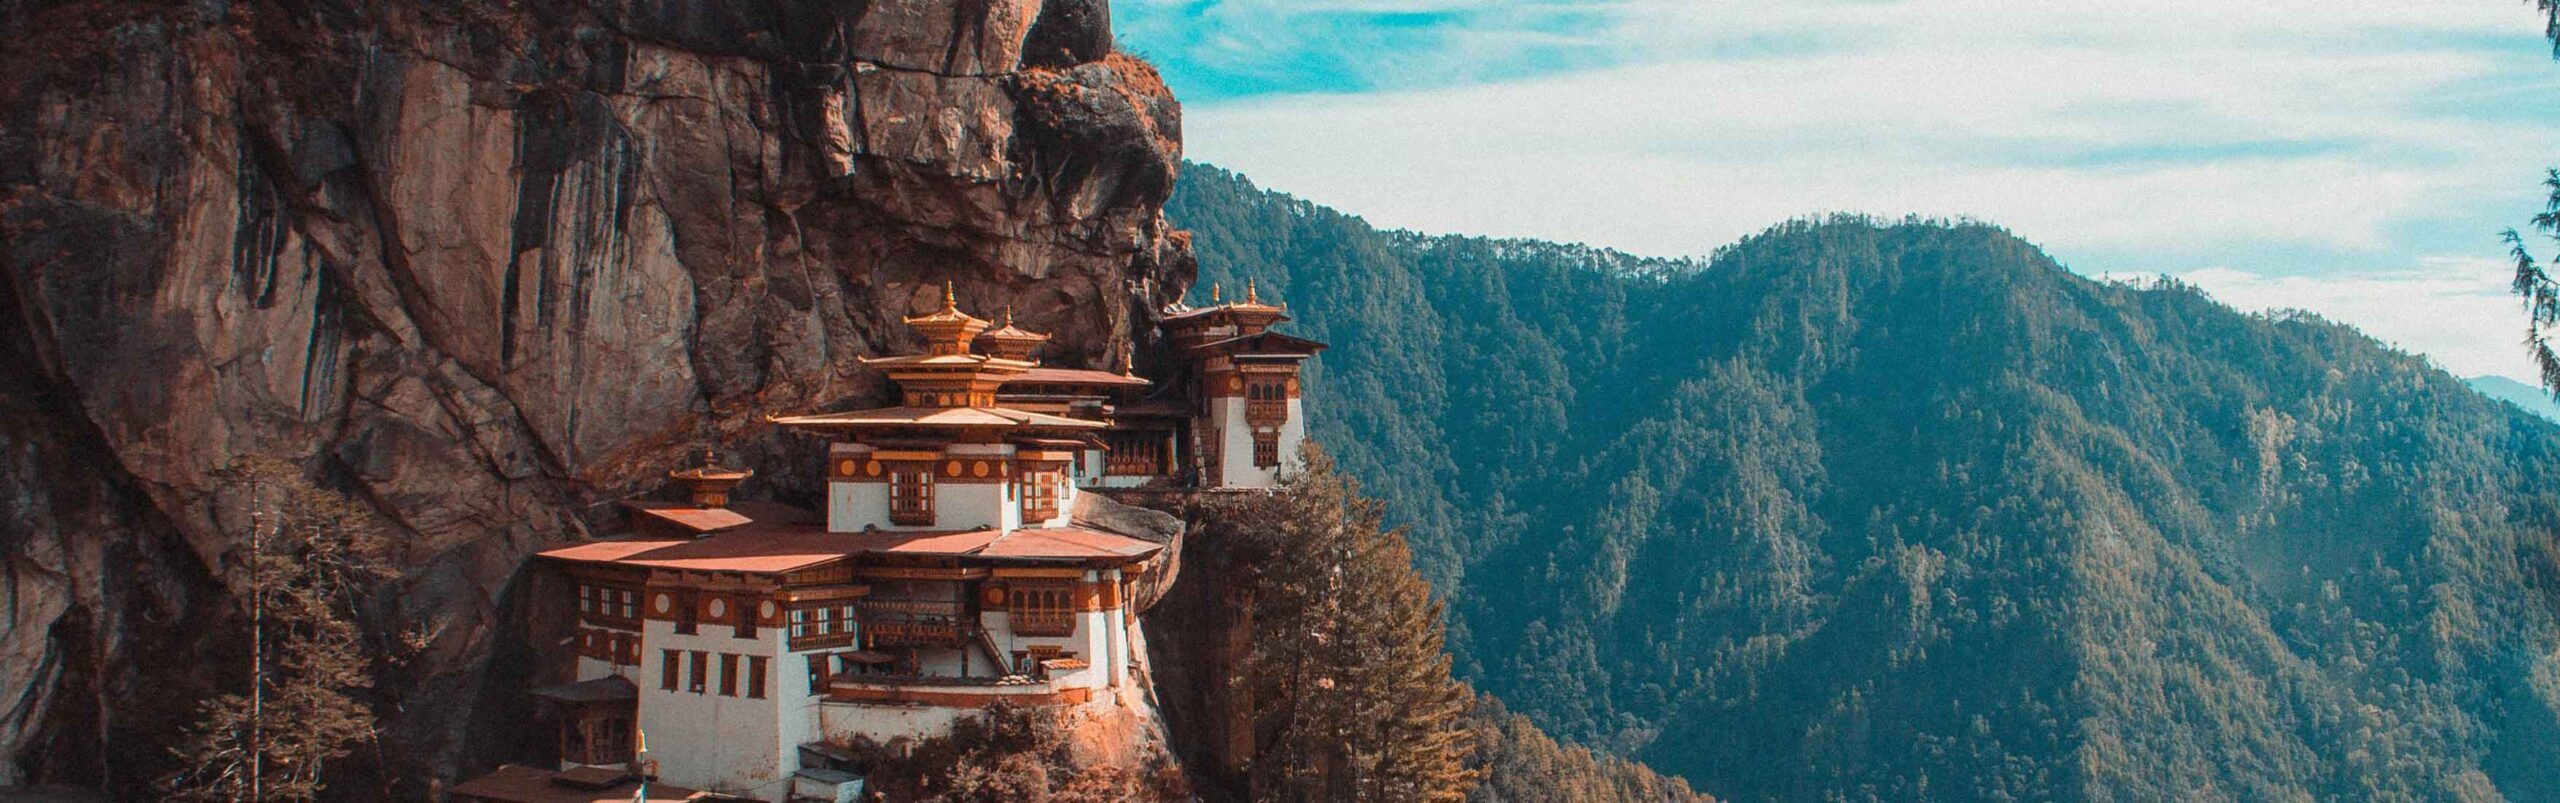 Header Bild - The Dariu Foundation - Bhutan